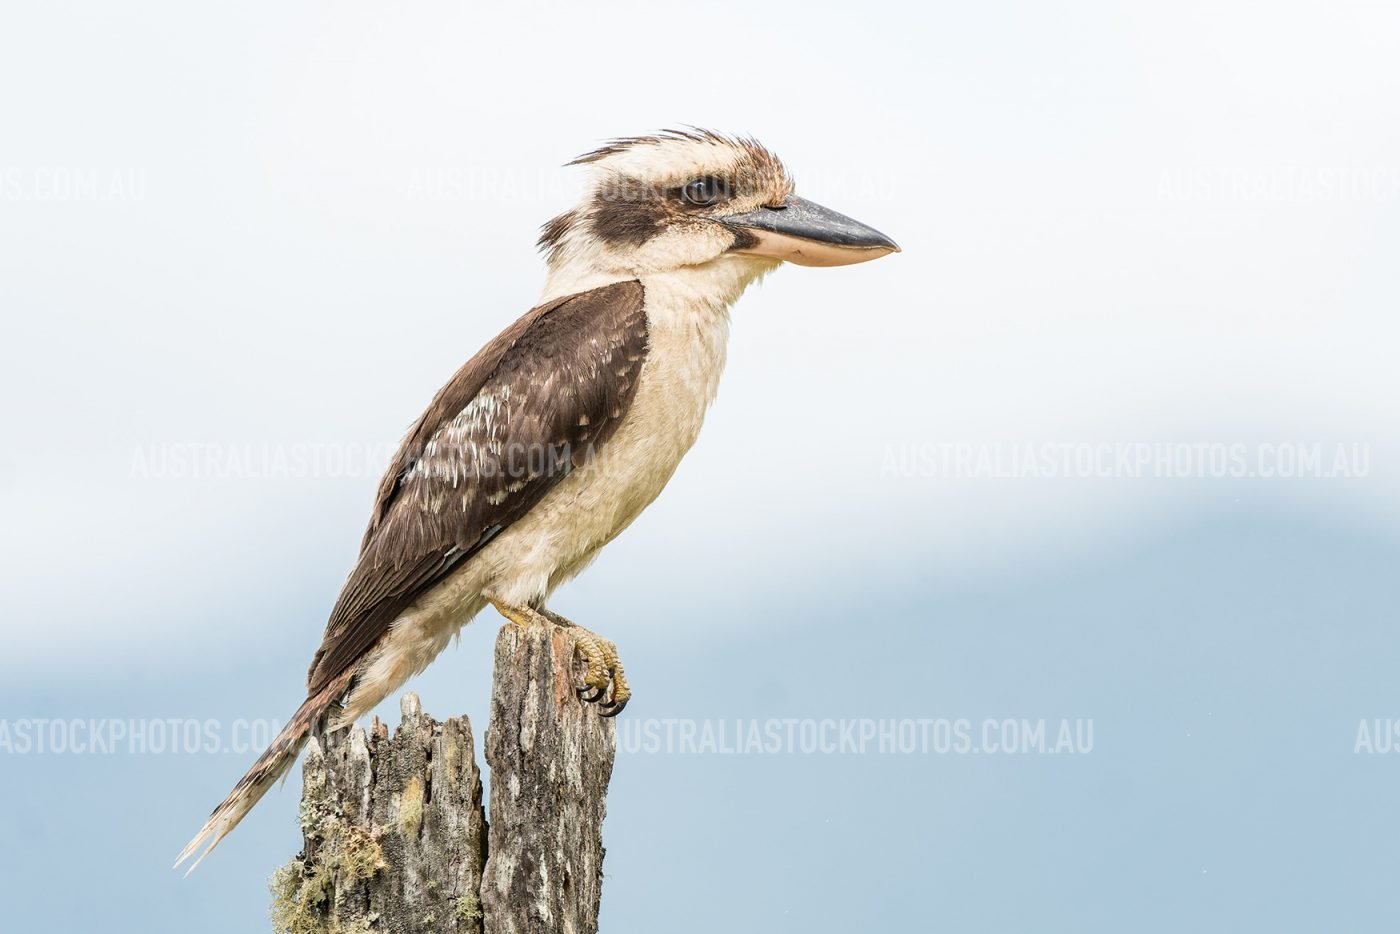 Kookaburra-Dacelo novaeguineae